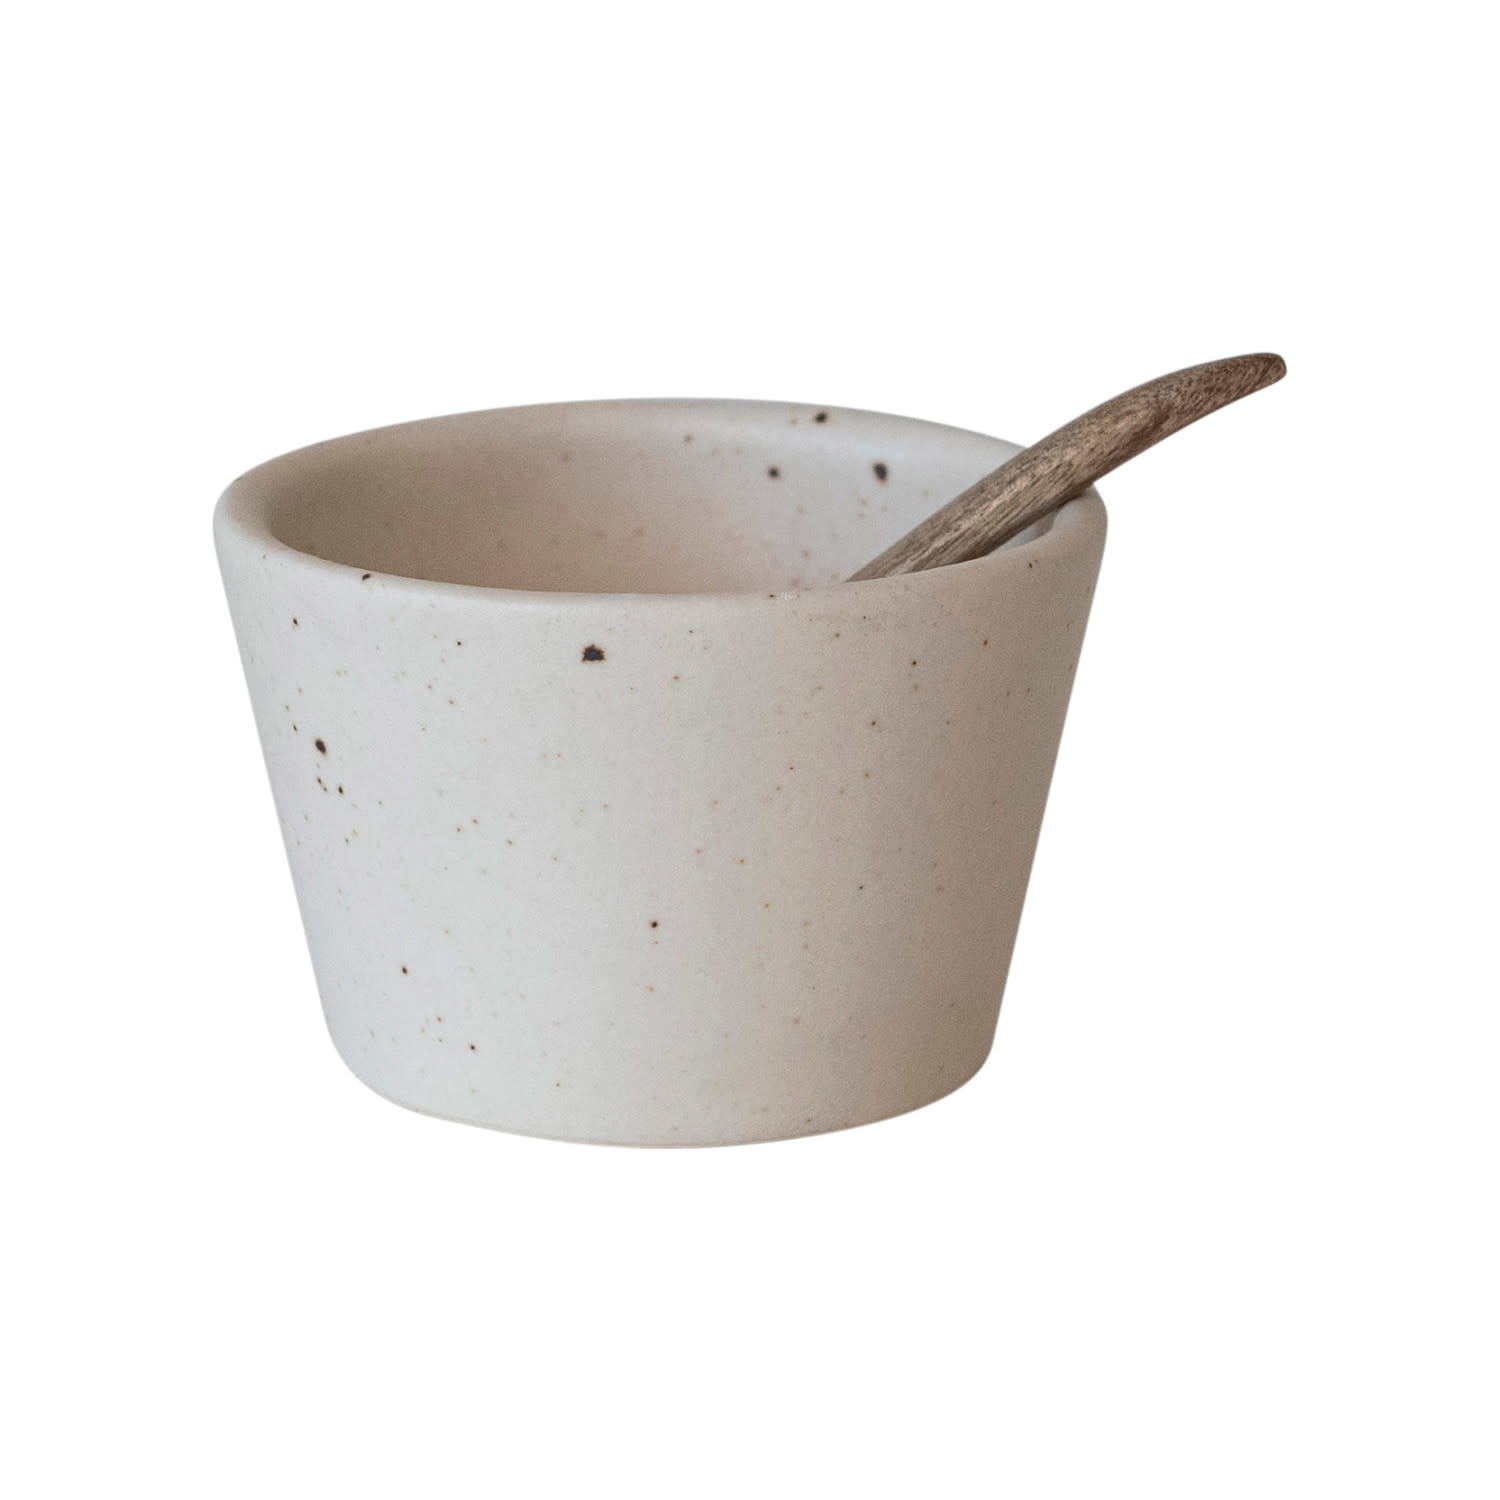 Stoneware Bowl with Mango Wood Spoon 3"